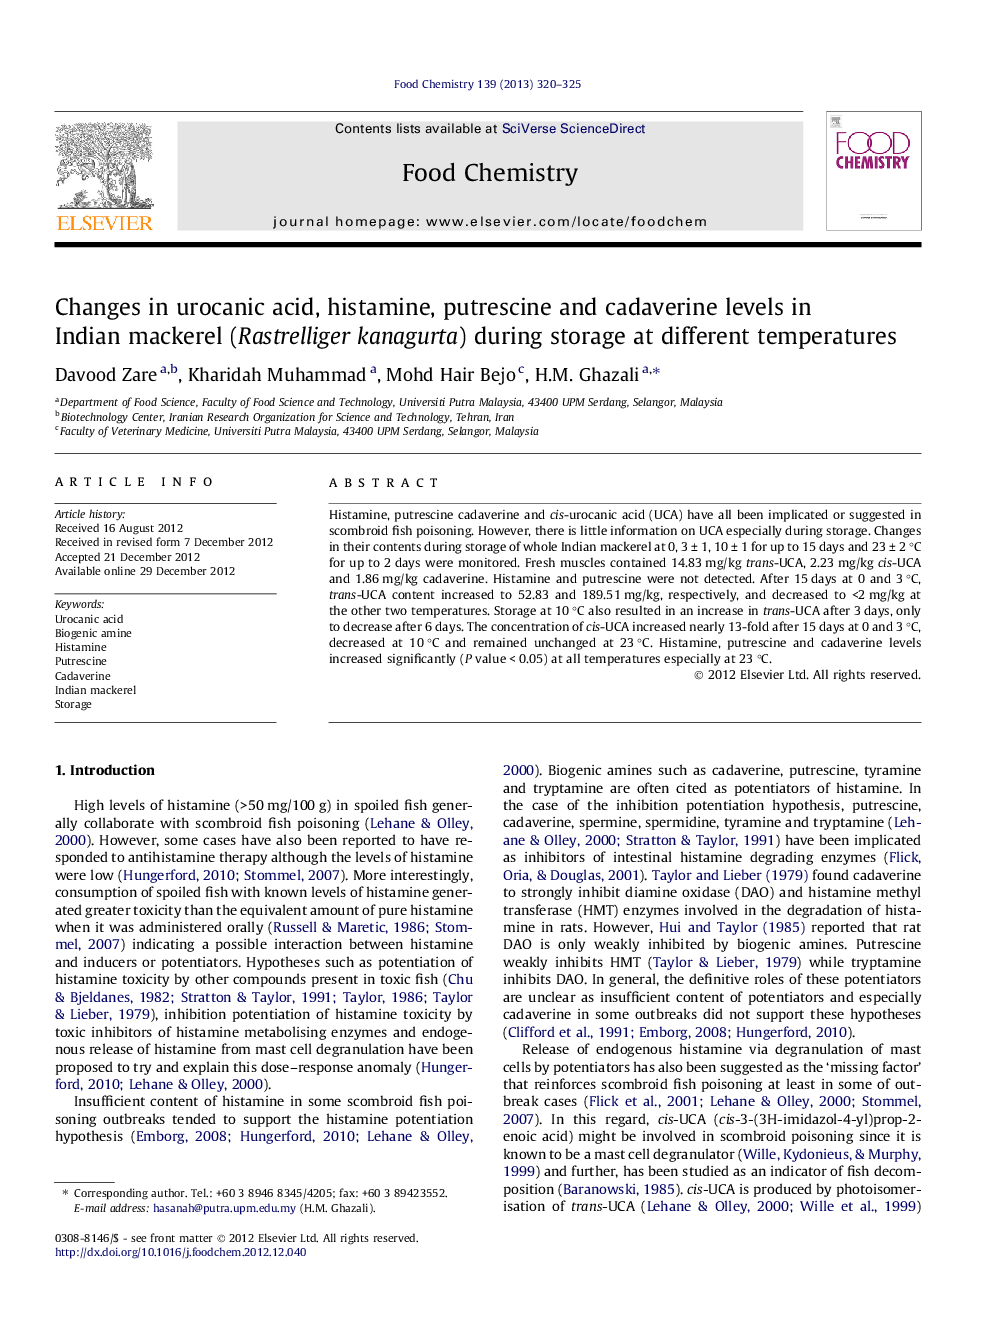 Changes in urocanic acid, histamine, putrescine and cadaverine levels in Indian mackerel (Rastrelliger kanagurta) during storage at different temperatures